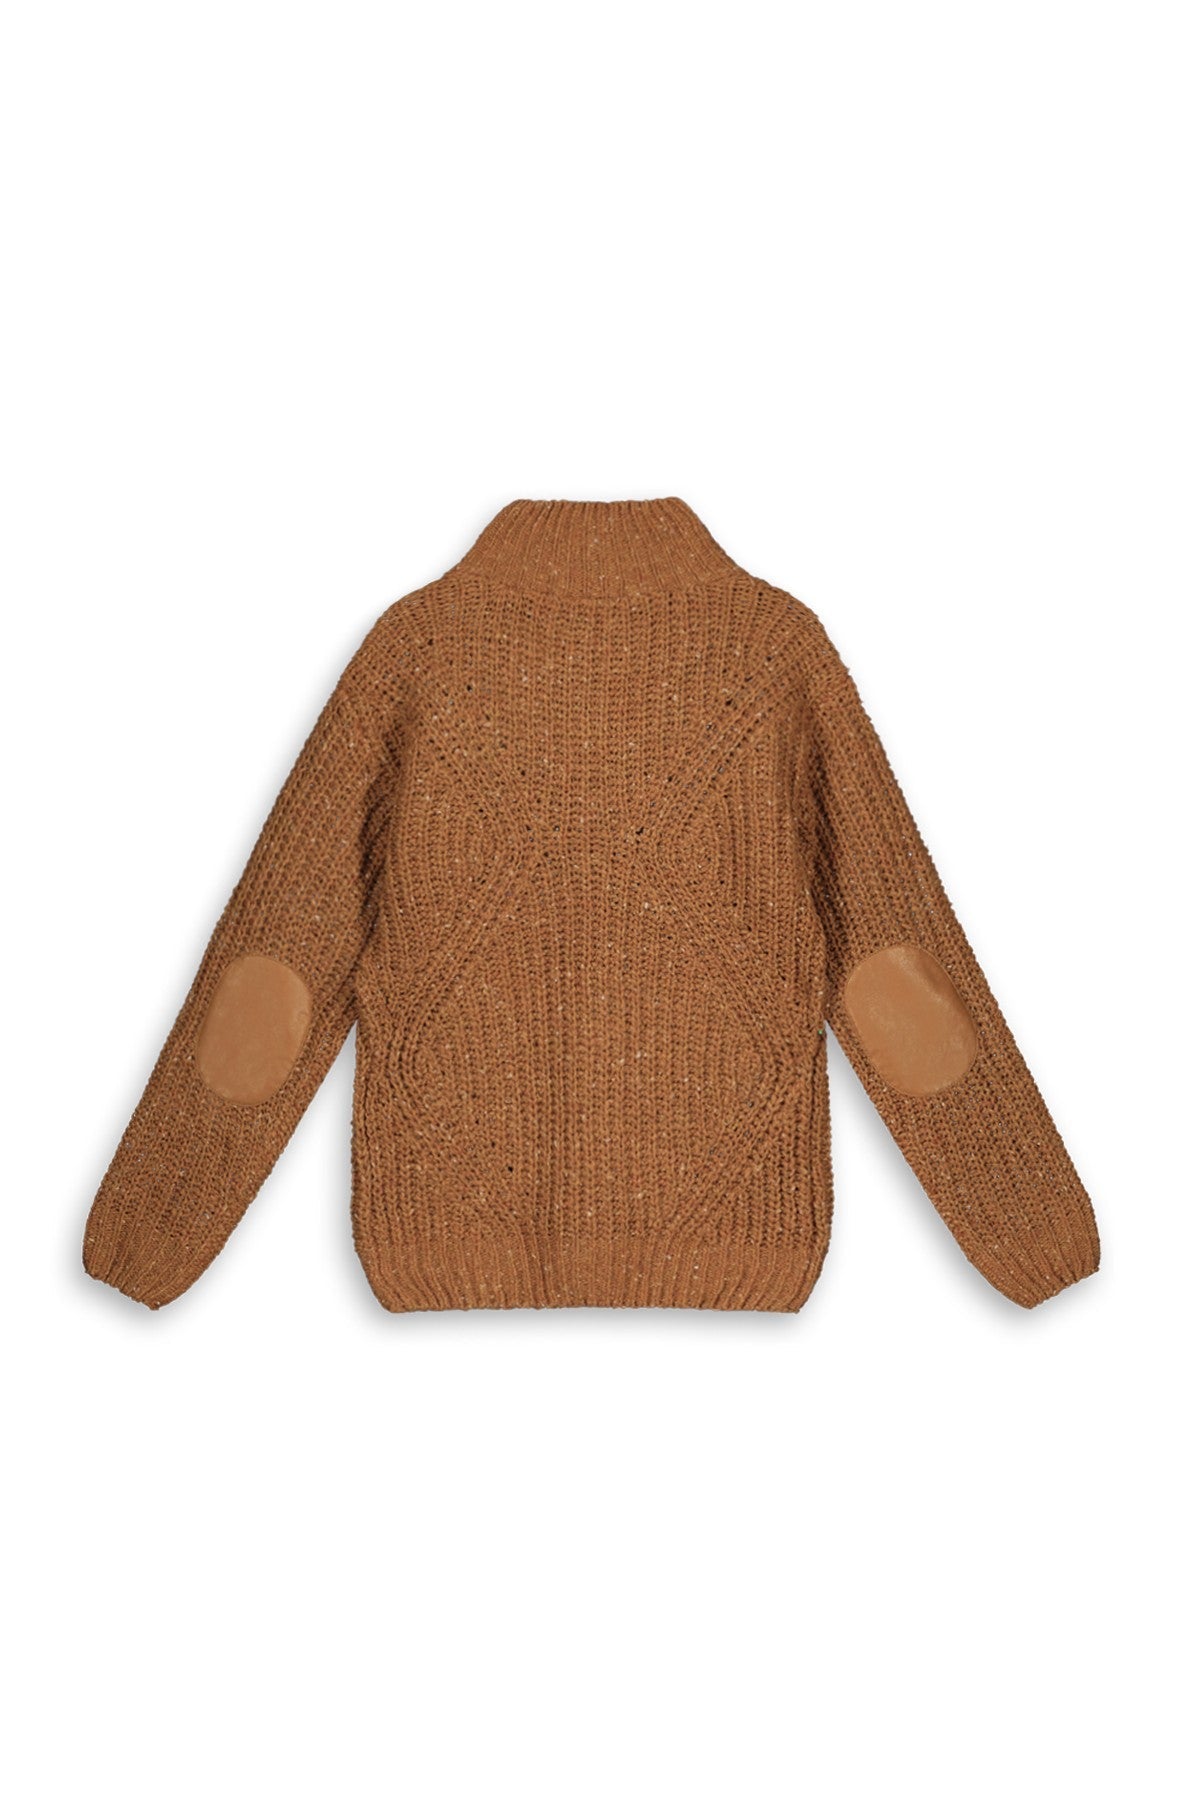 Jongens Knitted Sweater Ready On van Charlie Ray in de kleur Caramel in maat 164.